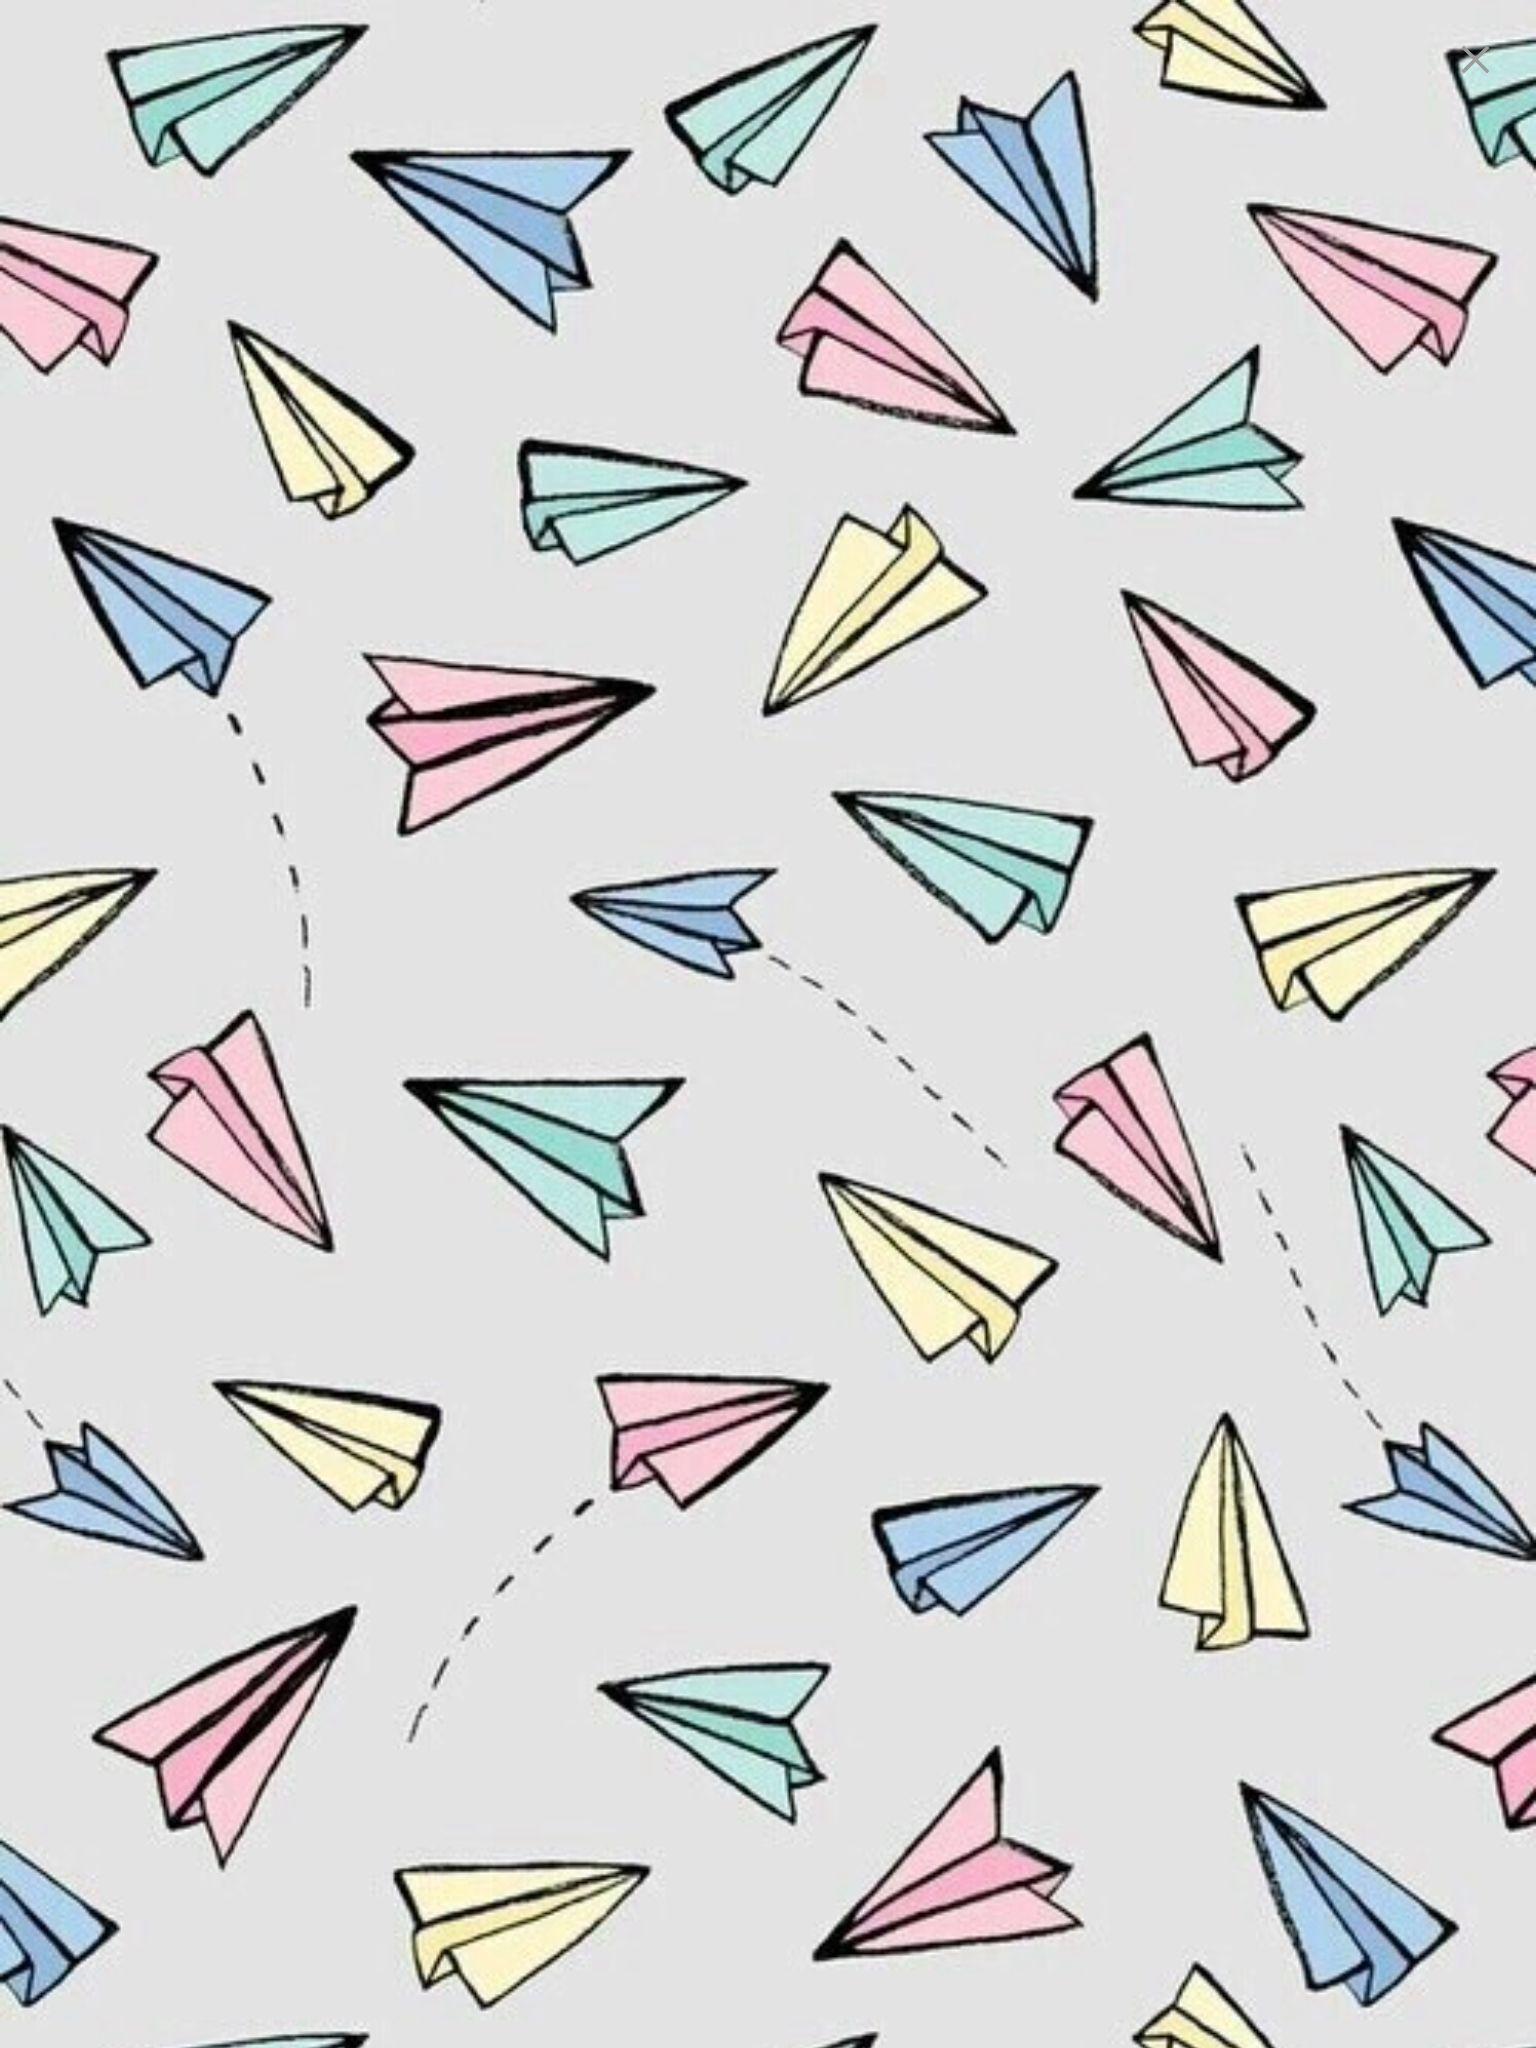 Paper planes. Fernweh ✈. Paper planes, Planes